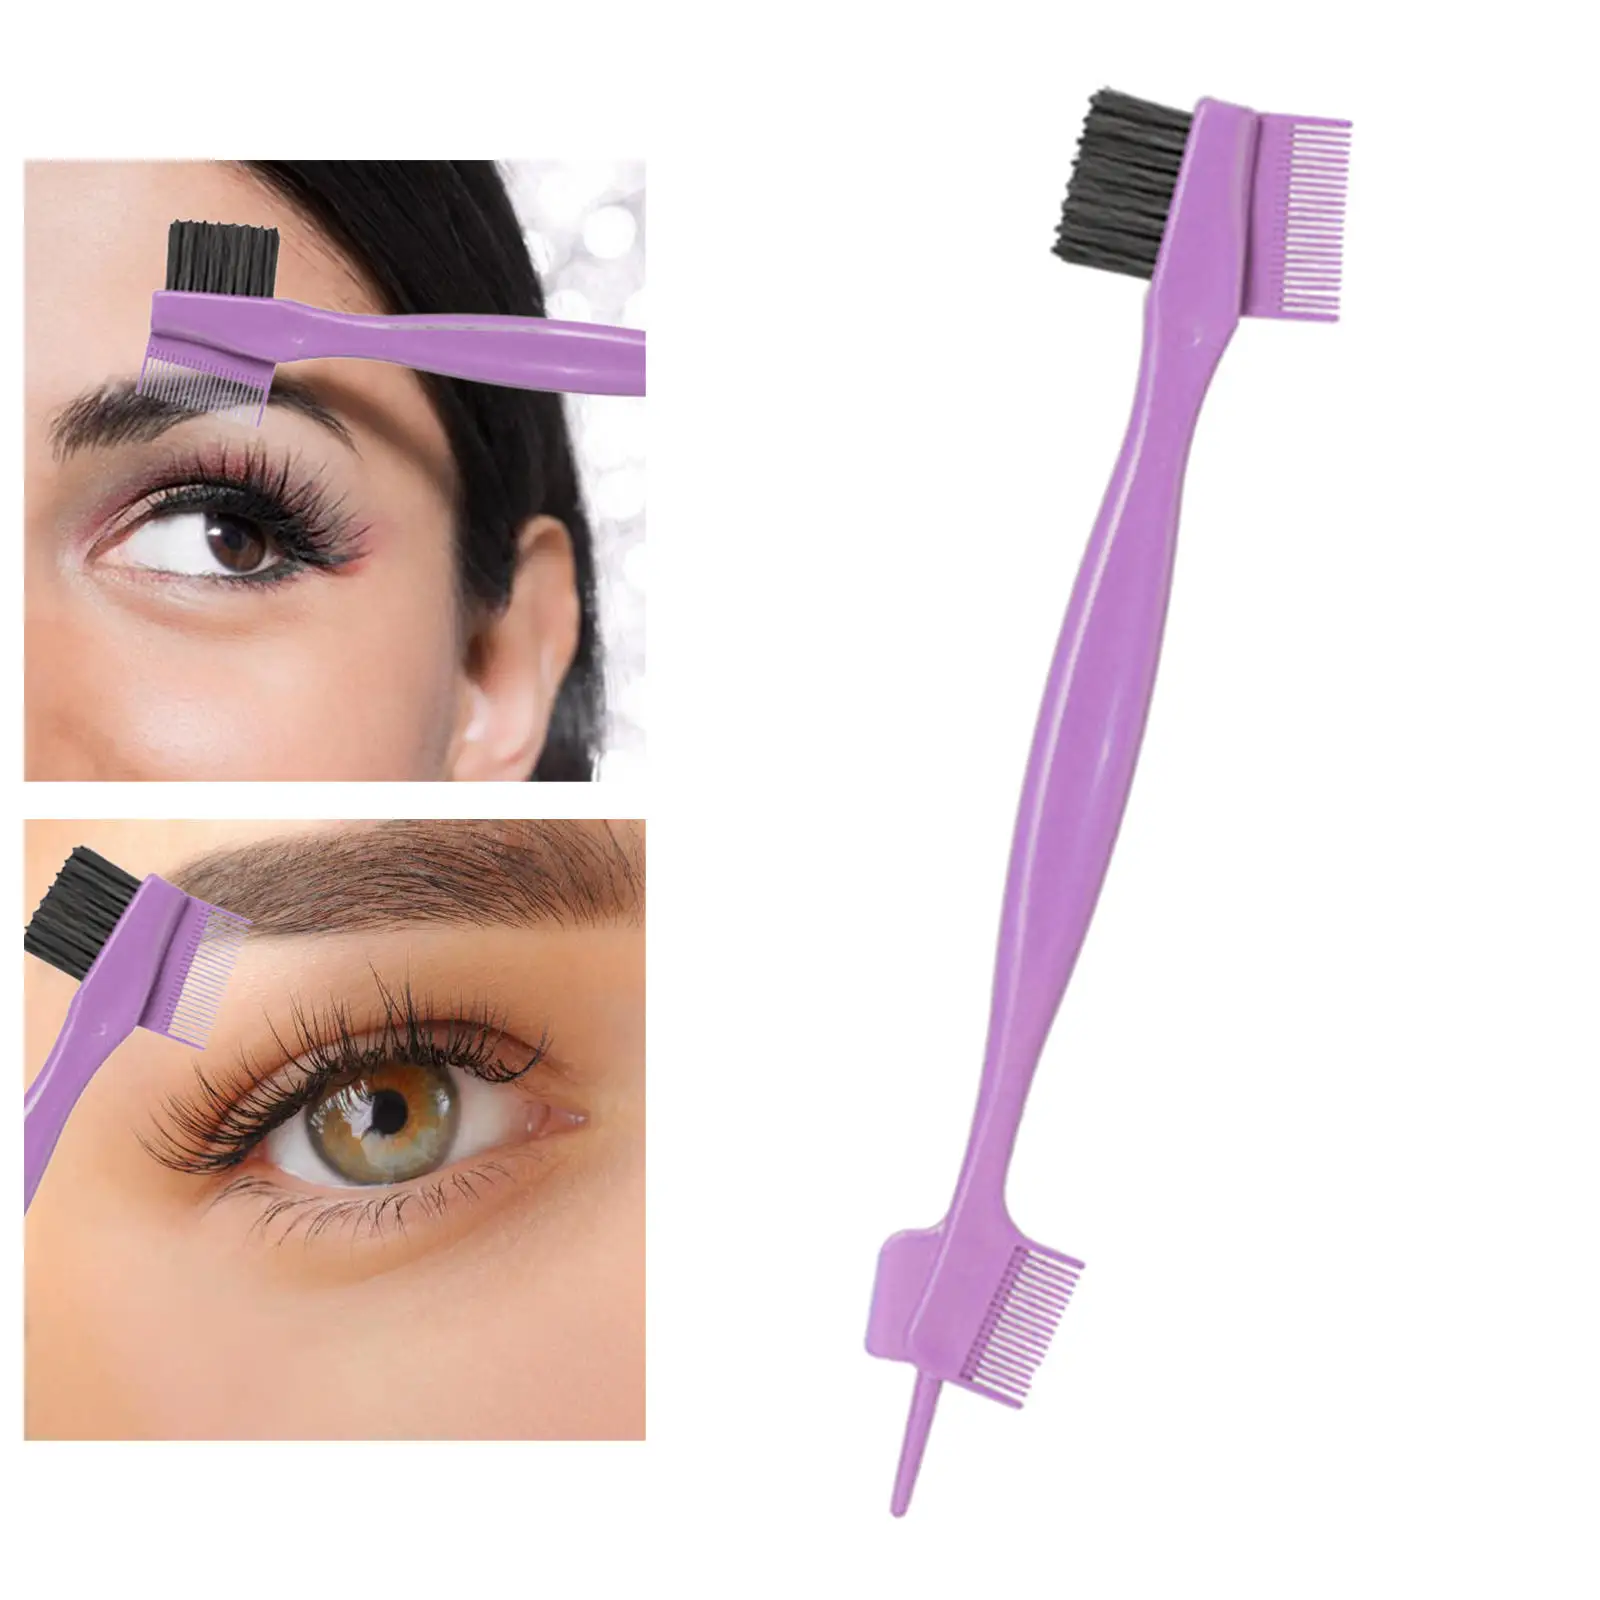 Sharper Multifunctional Double-Sided Eyebrow Brush Comb for Makeup Women Travel Girls